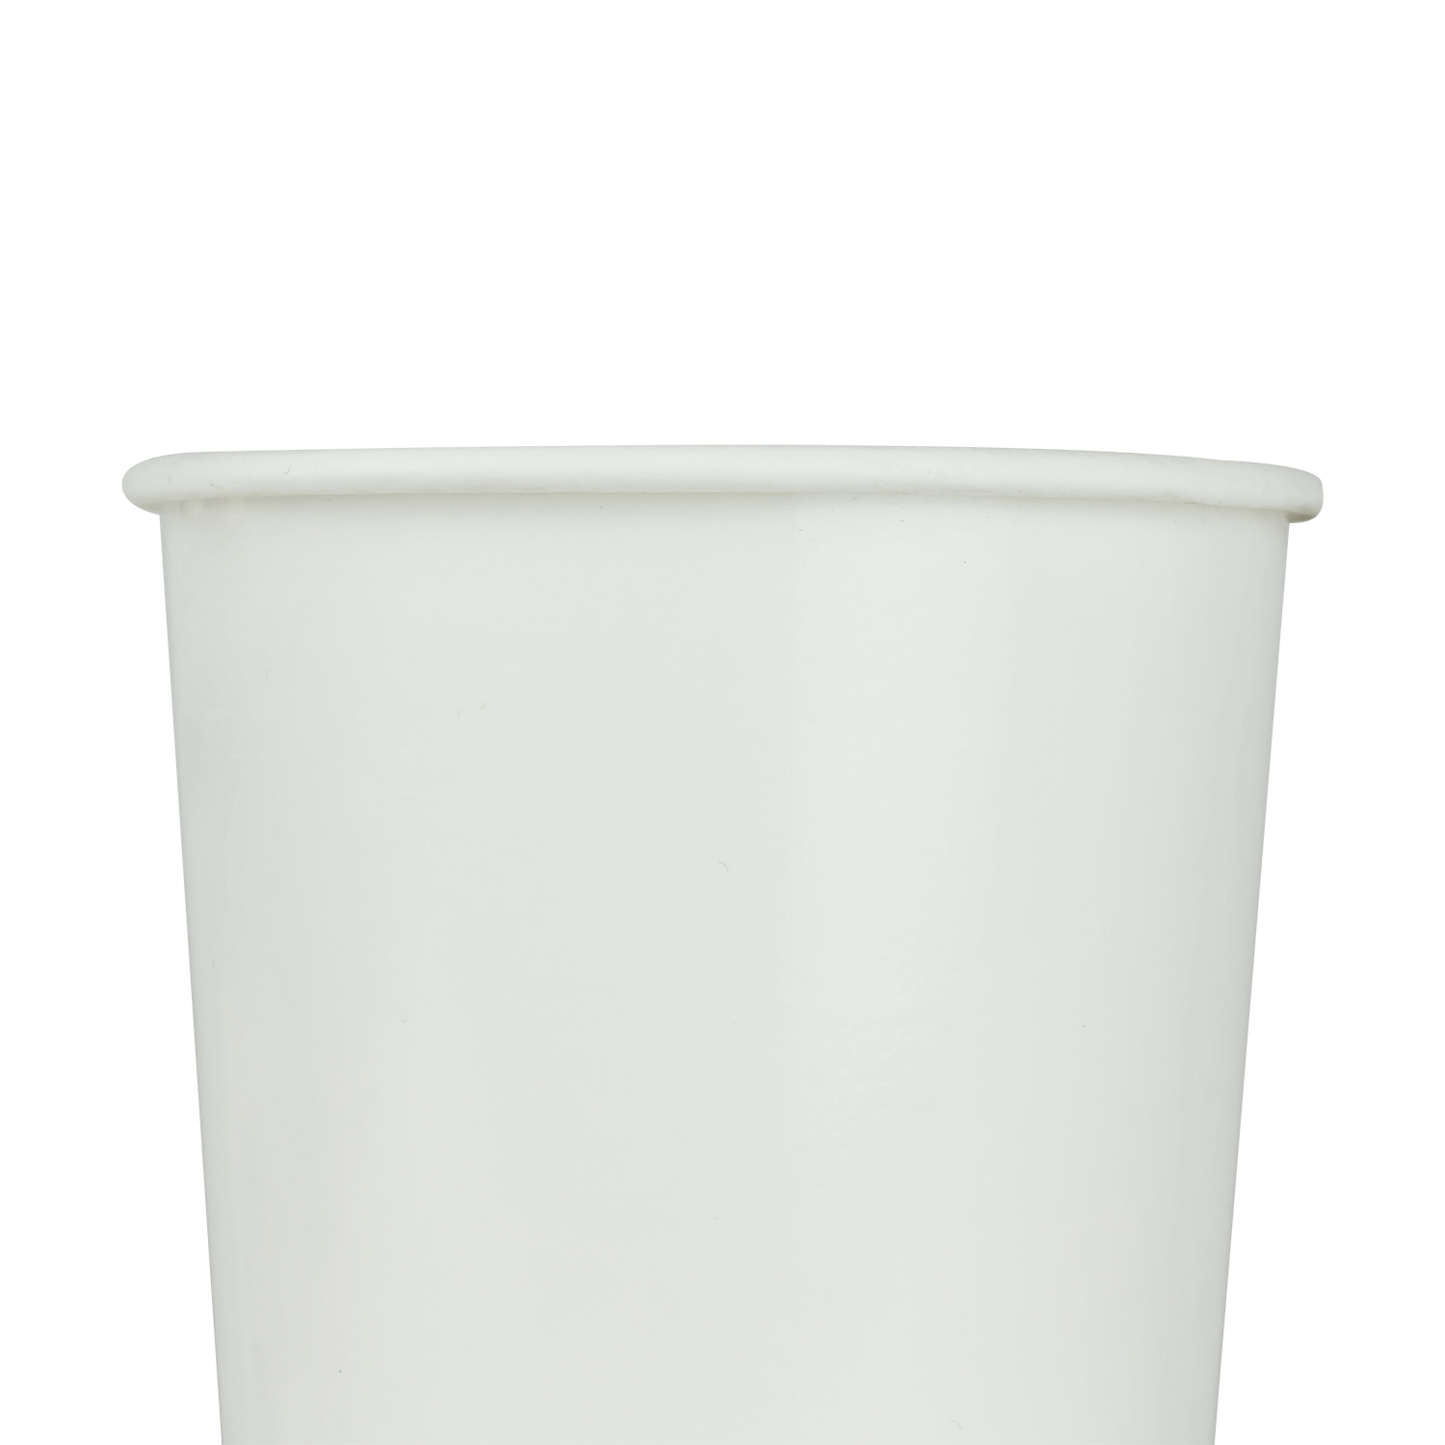 Karat 22oz Paper Cold Cup - White (90mm) - 1,000 ct